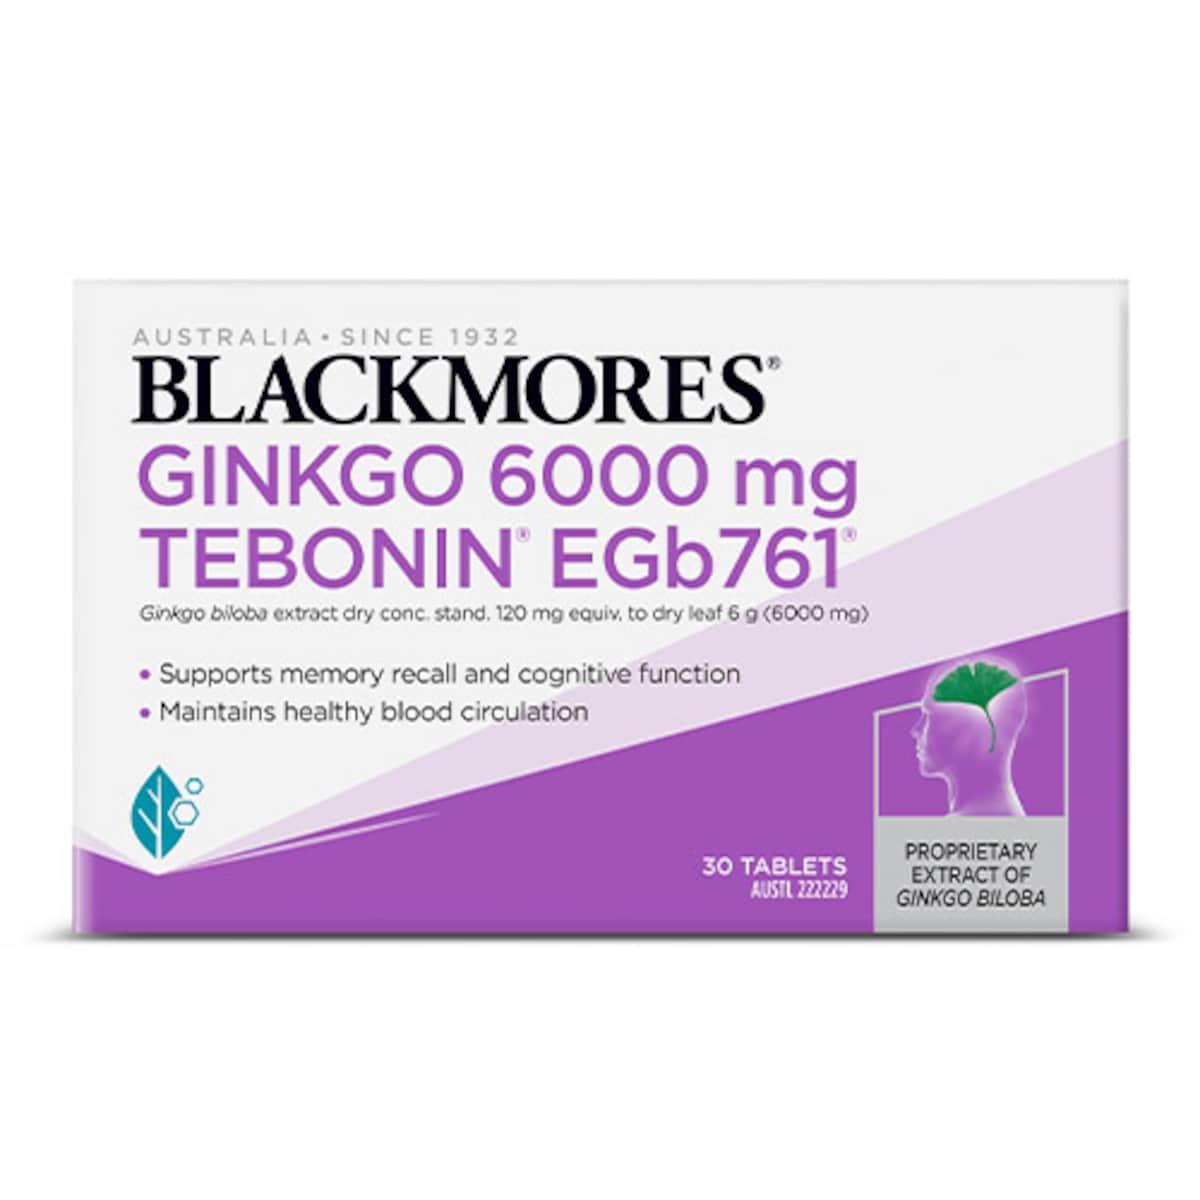 Blackmores Ginkgo 6000mg Tebonin 30 Tablets Australia